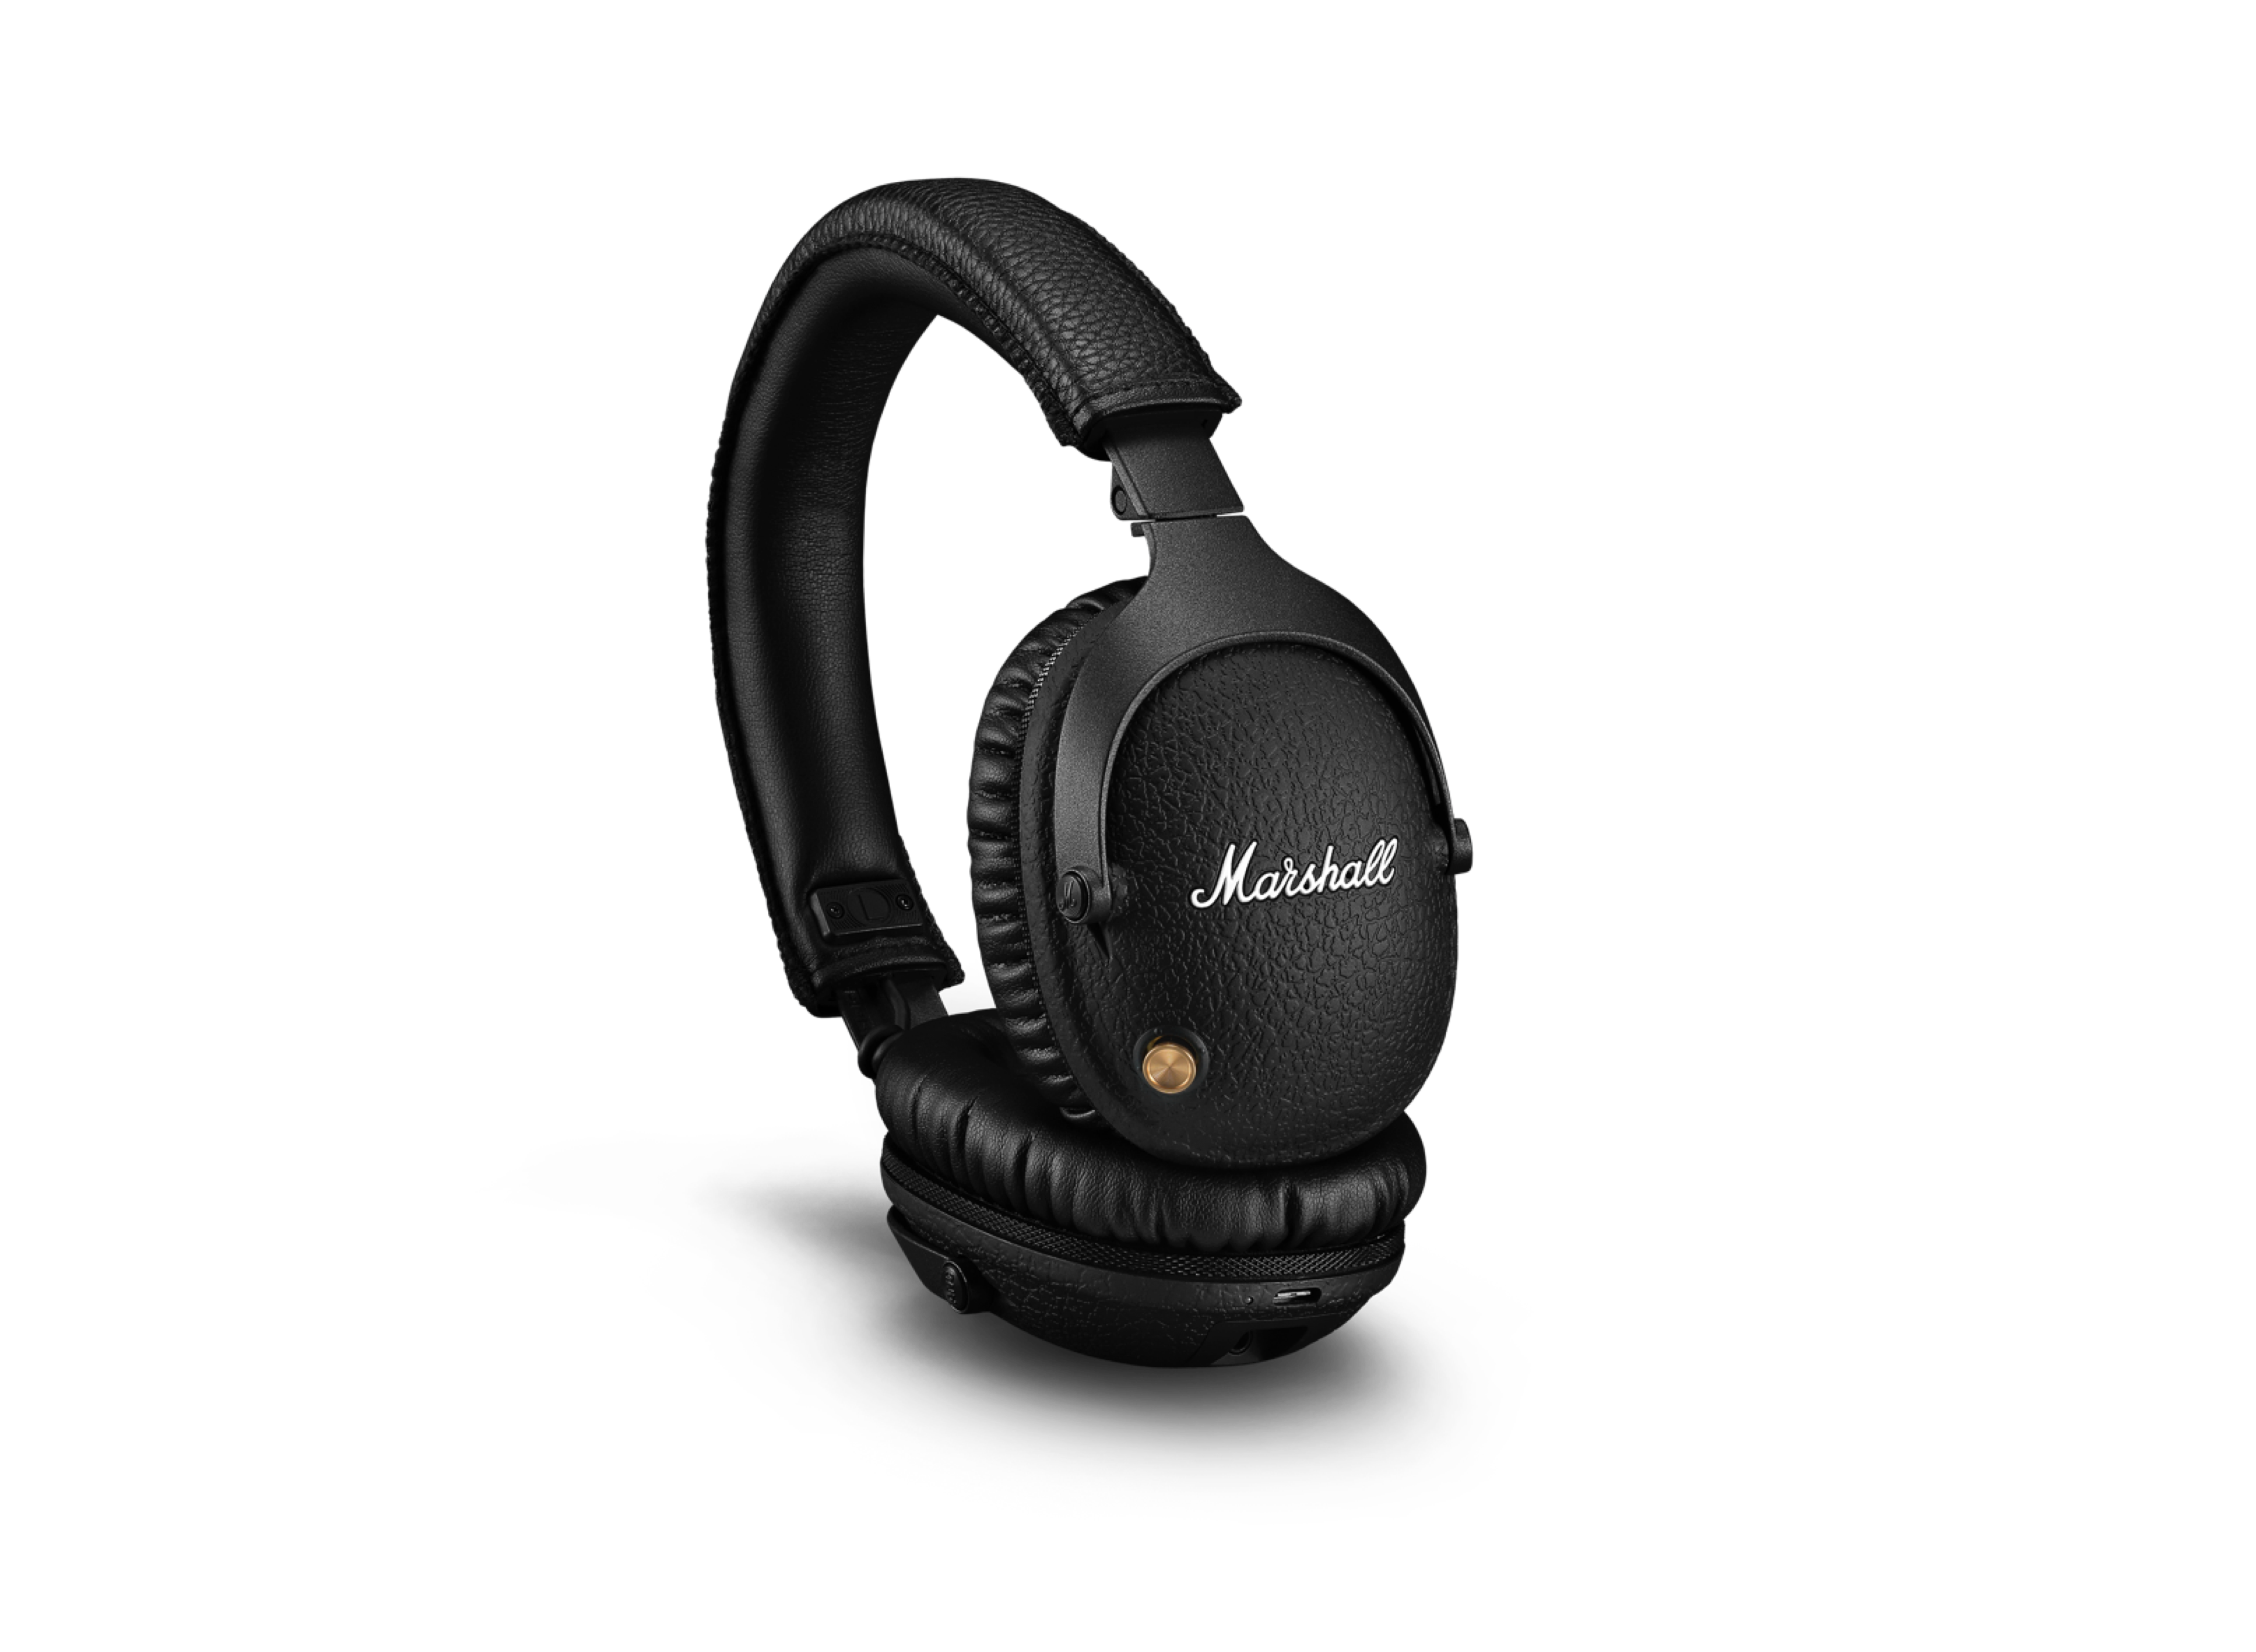 Marshall Black Headphones - Best Buy